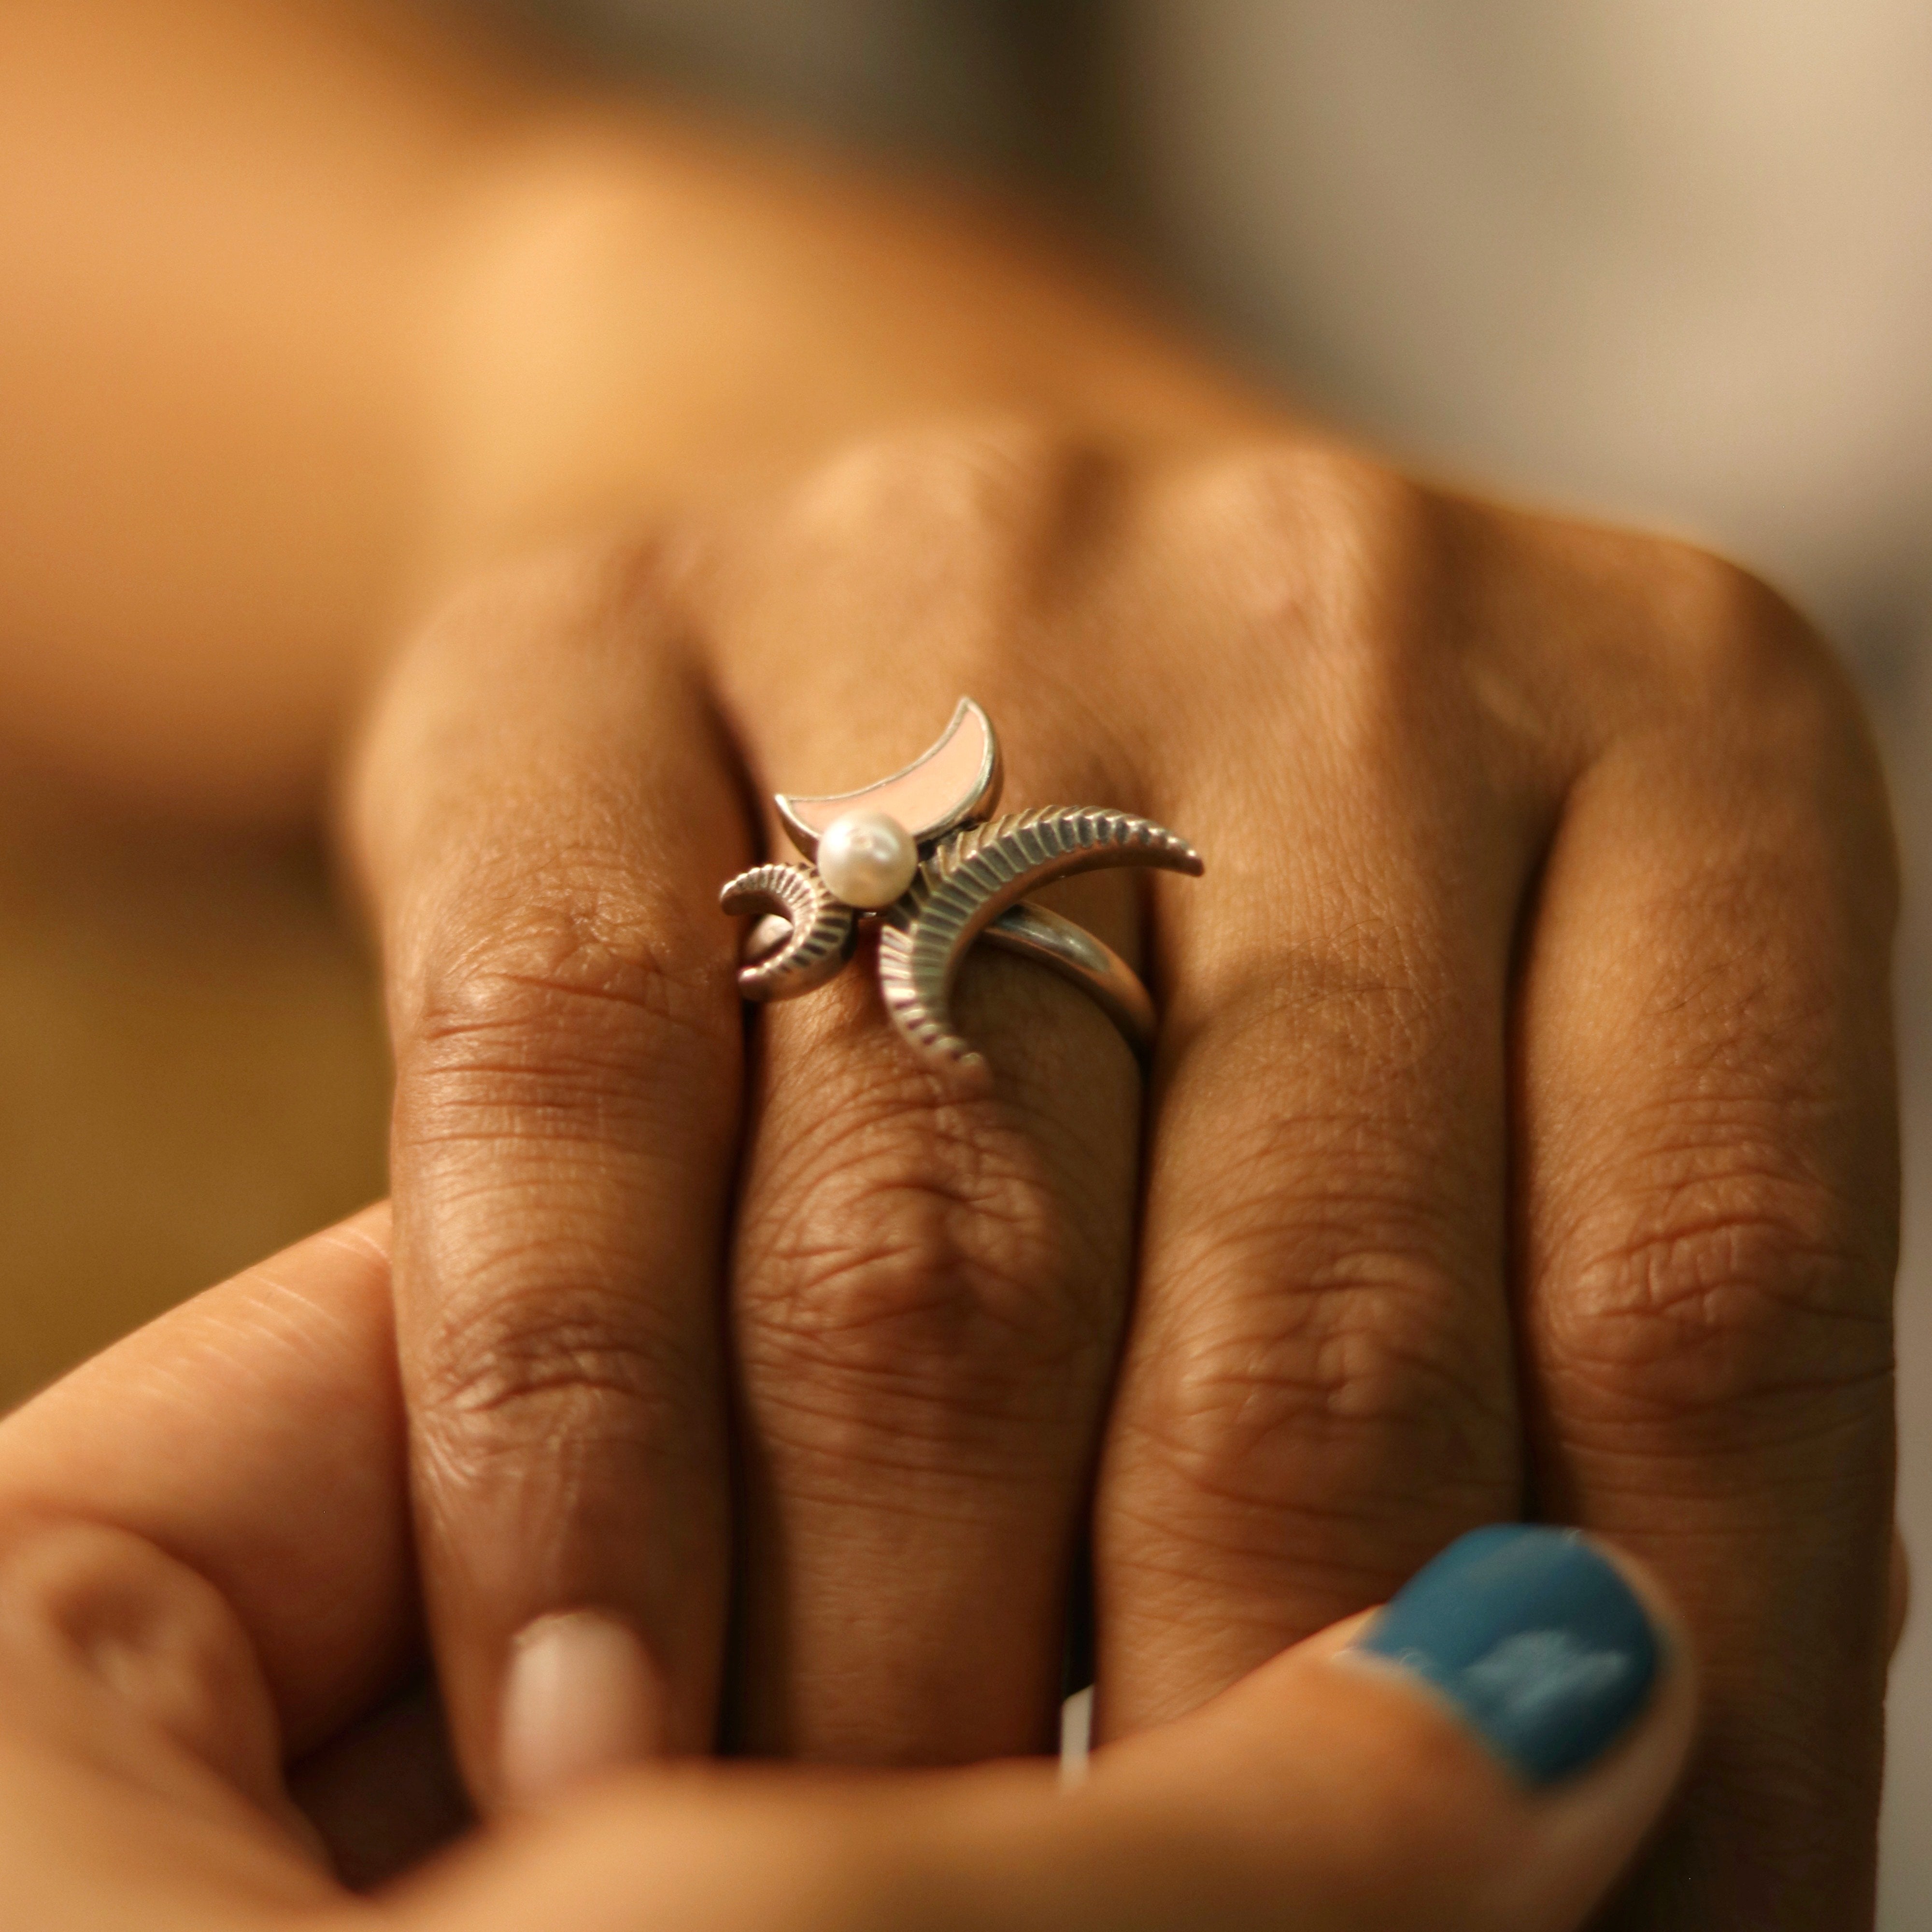 sterling silver thumb ring adjustable with swirls pattern - handmade | eBay